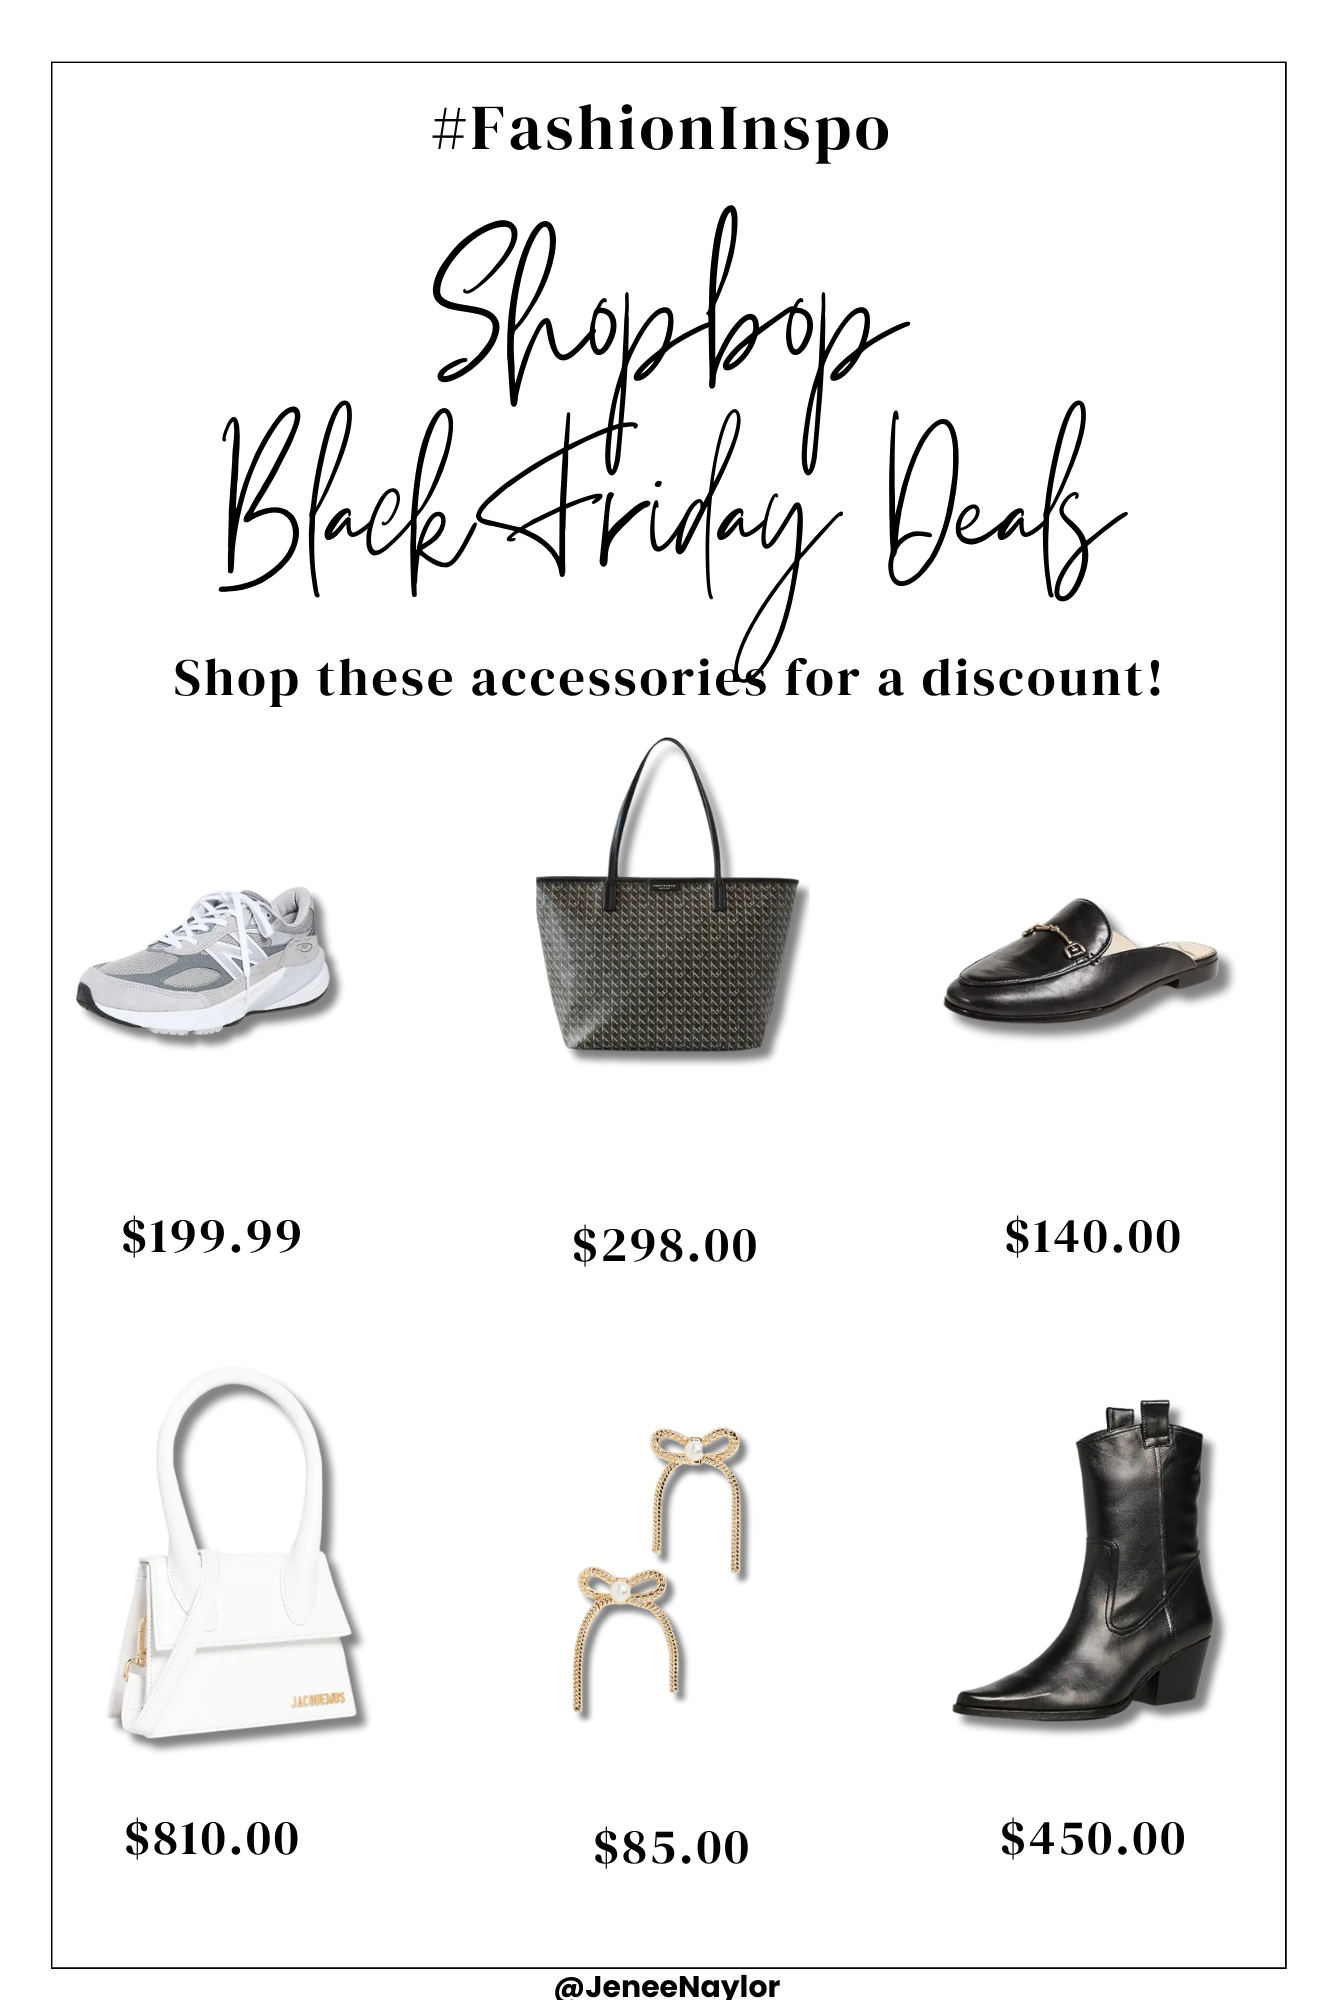 Shopbop Black Friday Sale!